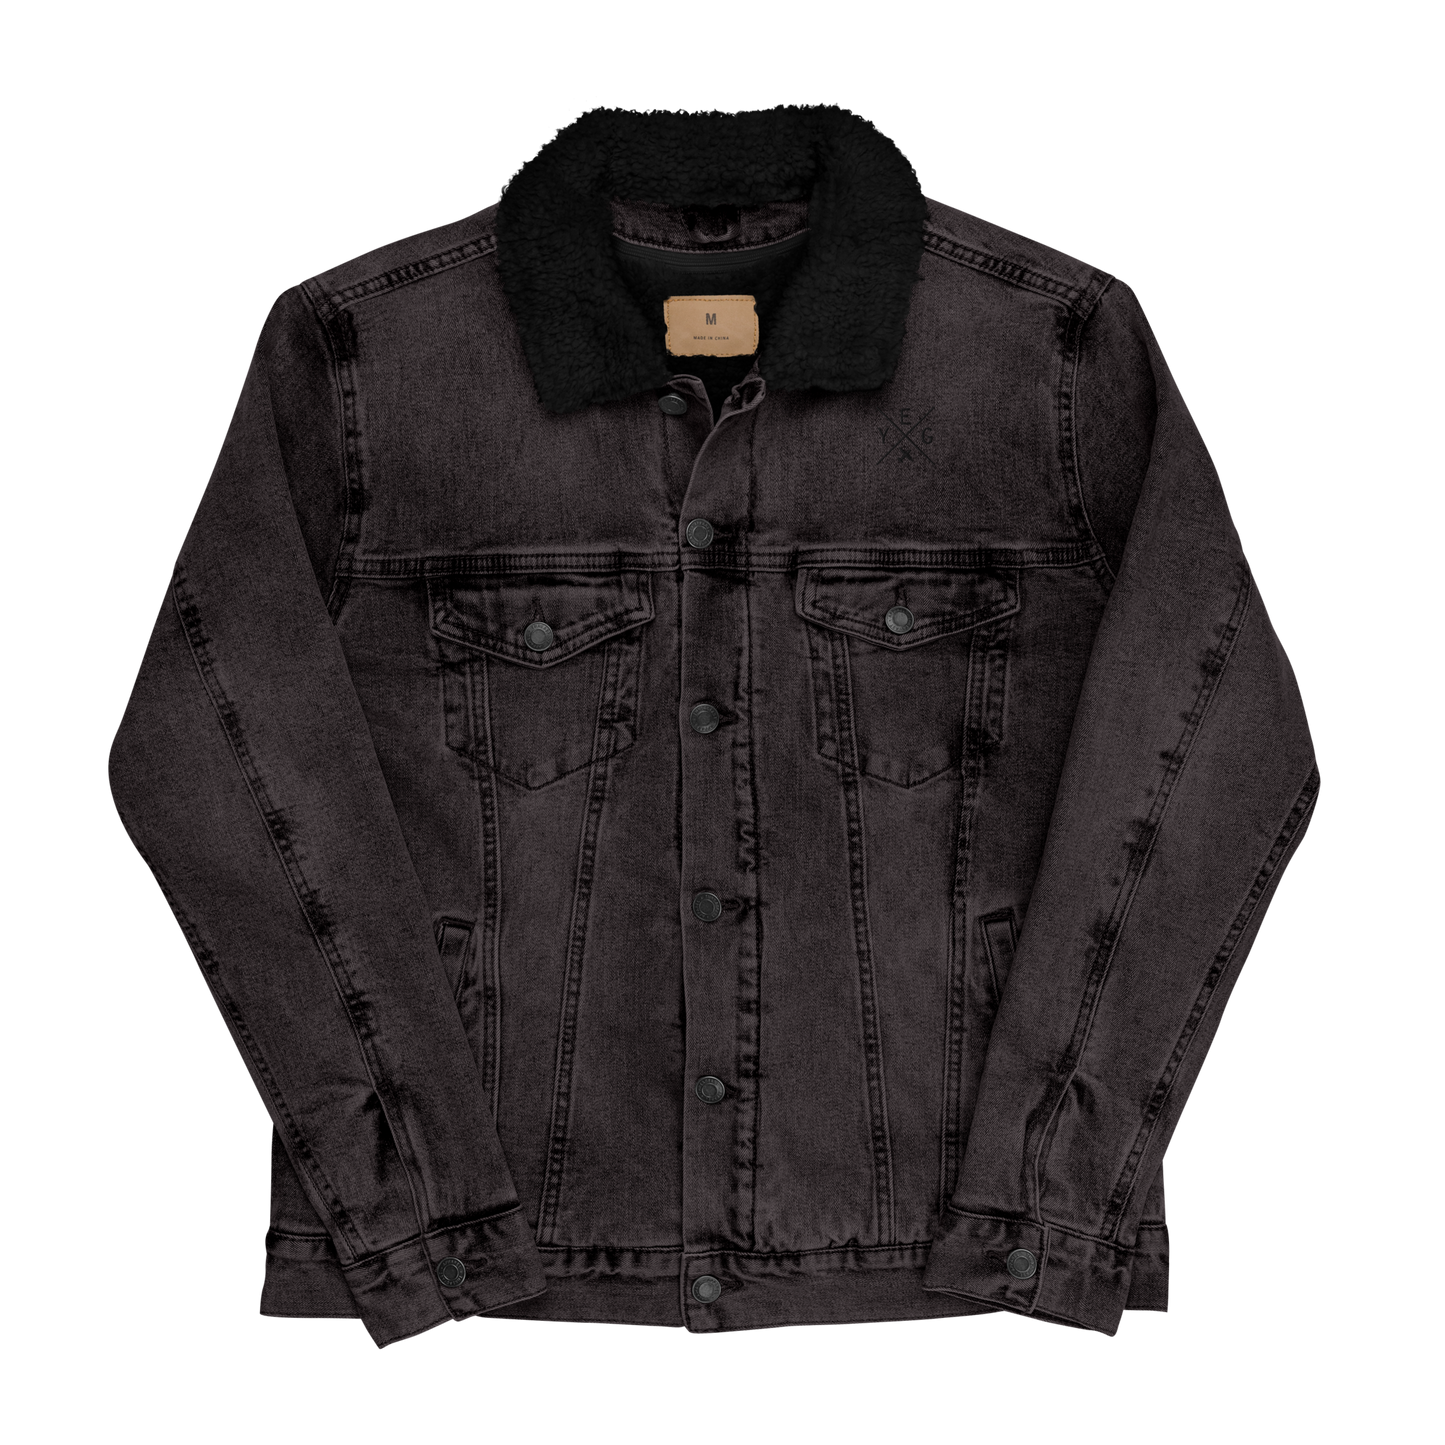 YHM Designs - YEG Edmonton Denim Sherpa Jacket - Crossed-X Design with Airport Code and Vintage Propliner - Black & White Embroidery - Image 02